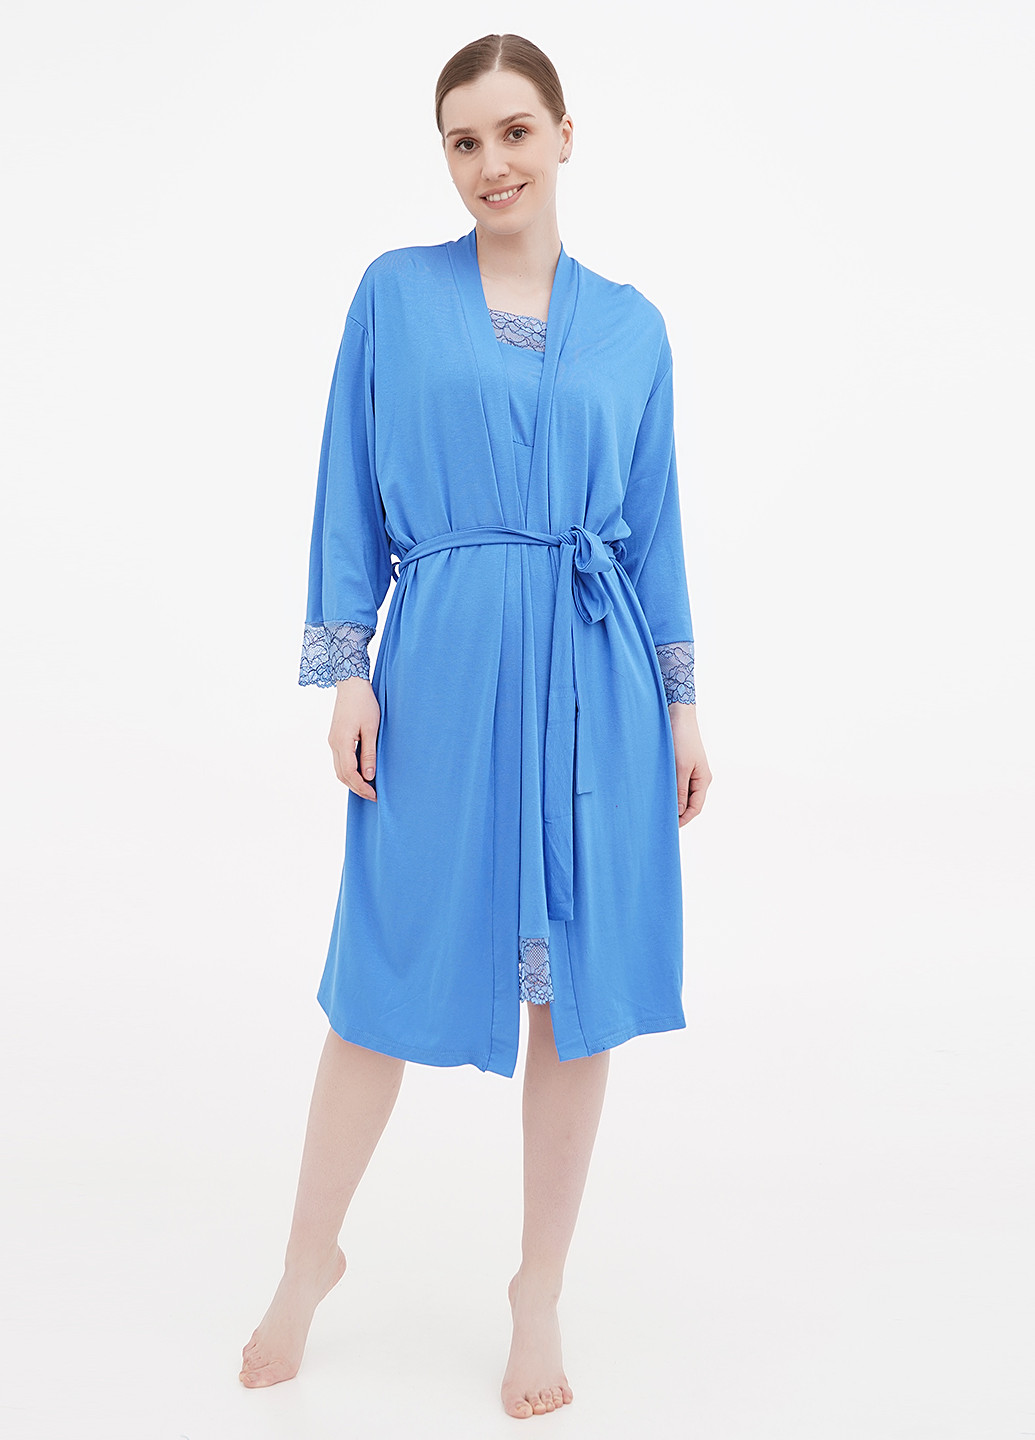 Синий демисезонный комплект (ночная рубашка, халат) Aniele